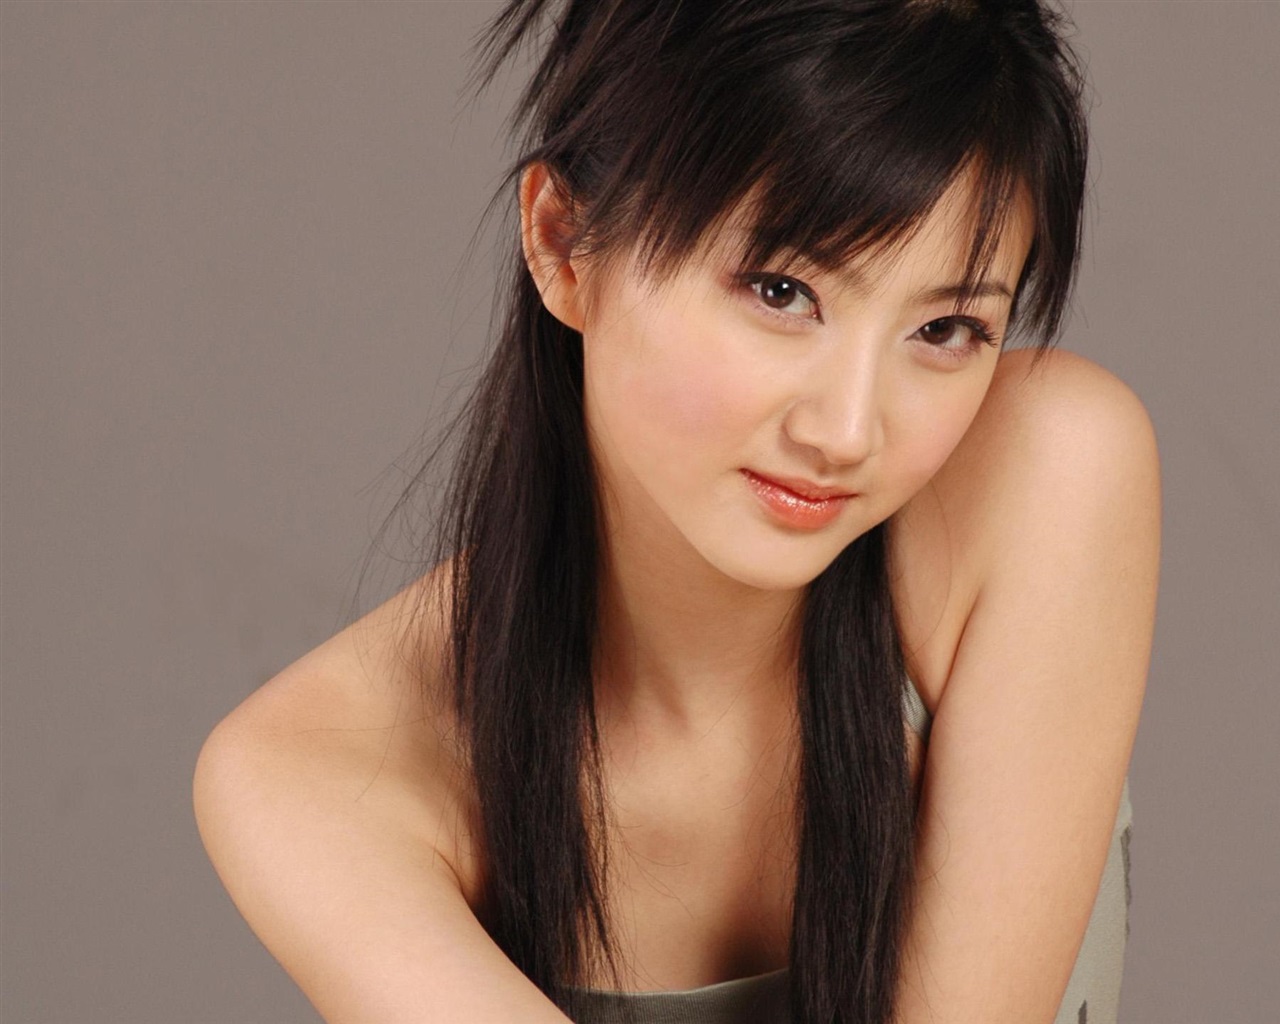 Pure Chinese girl, long hair Desktop Wallpaper 1280x1024 wallpaper download...